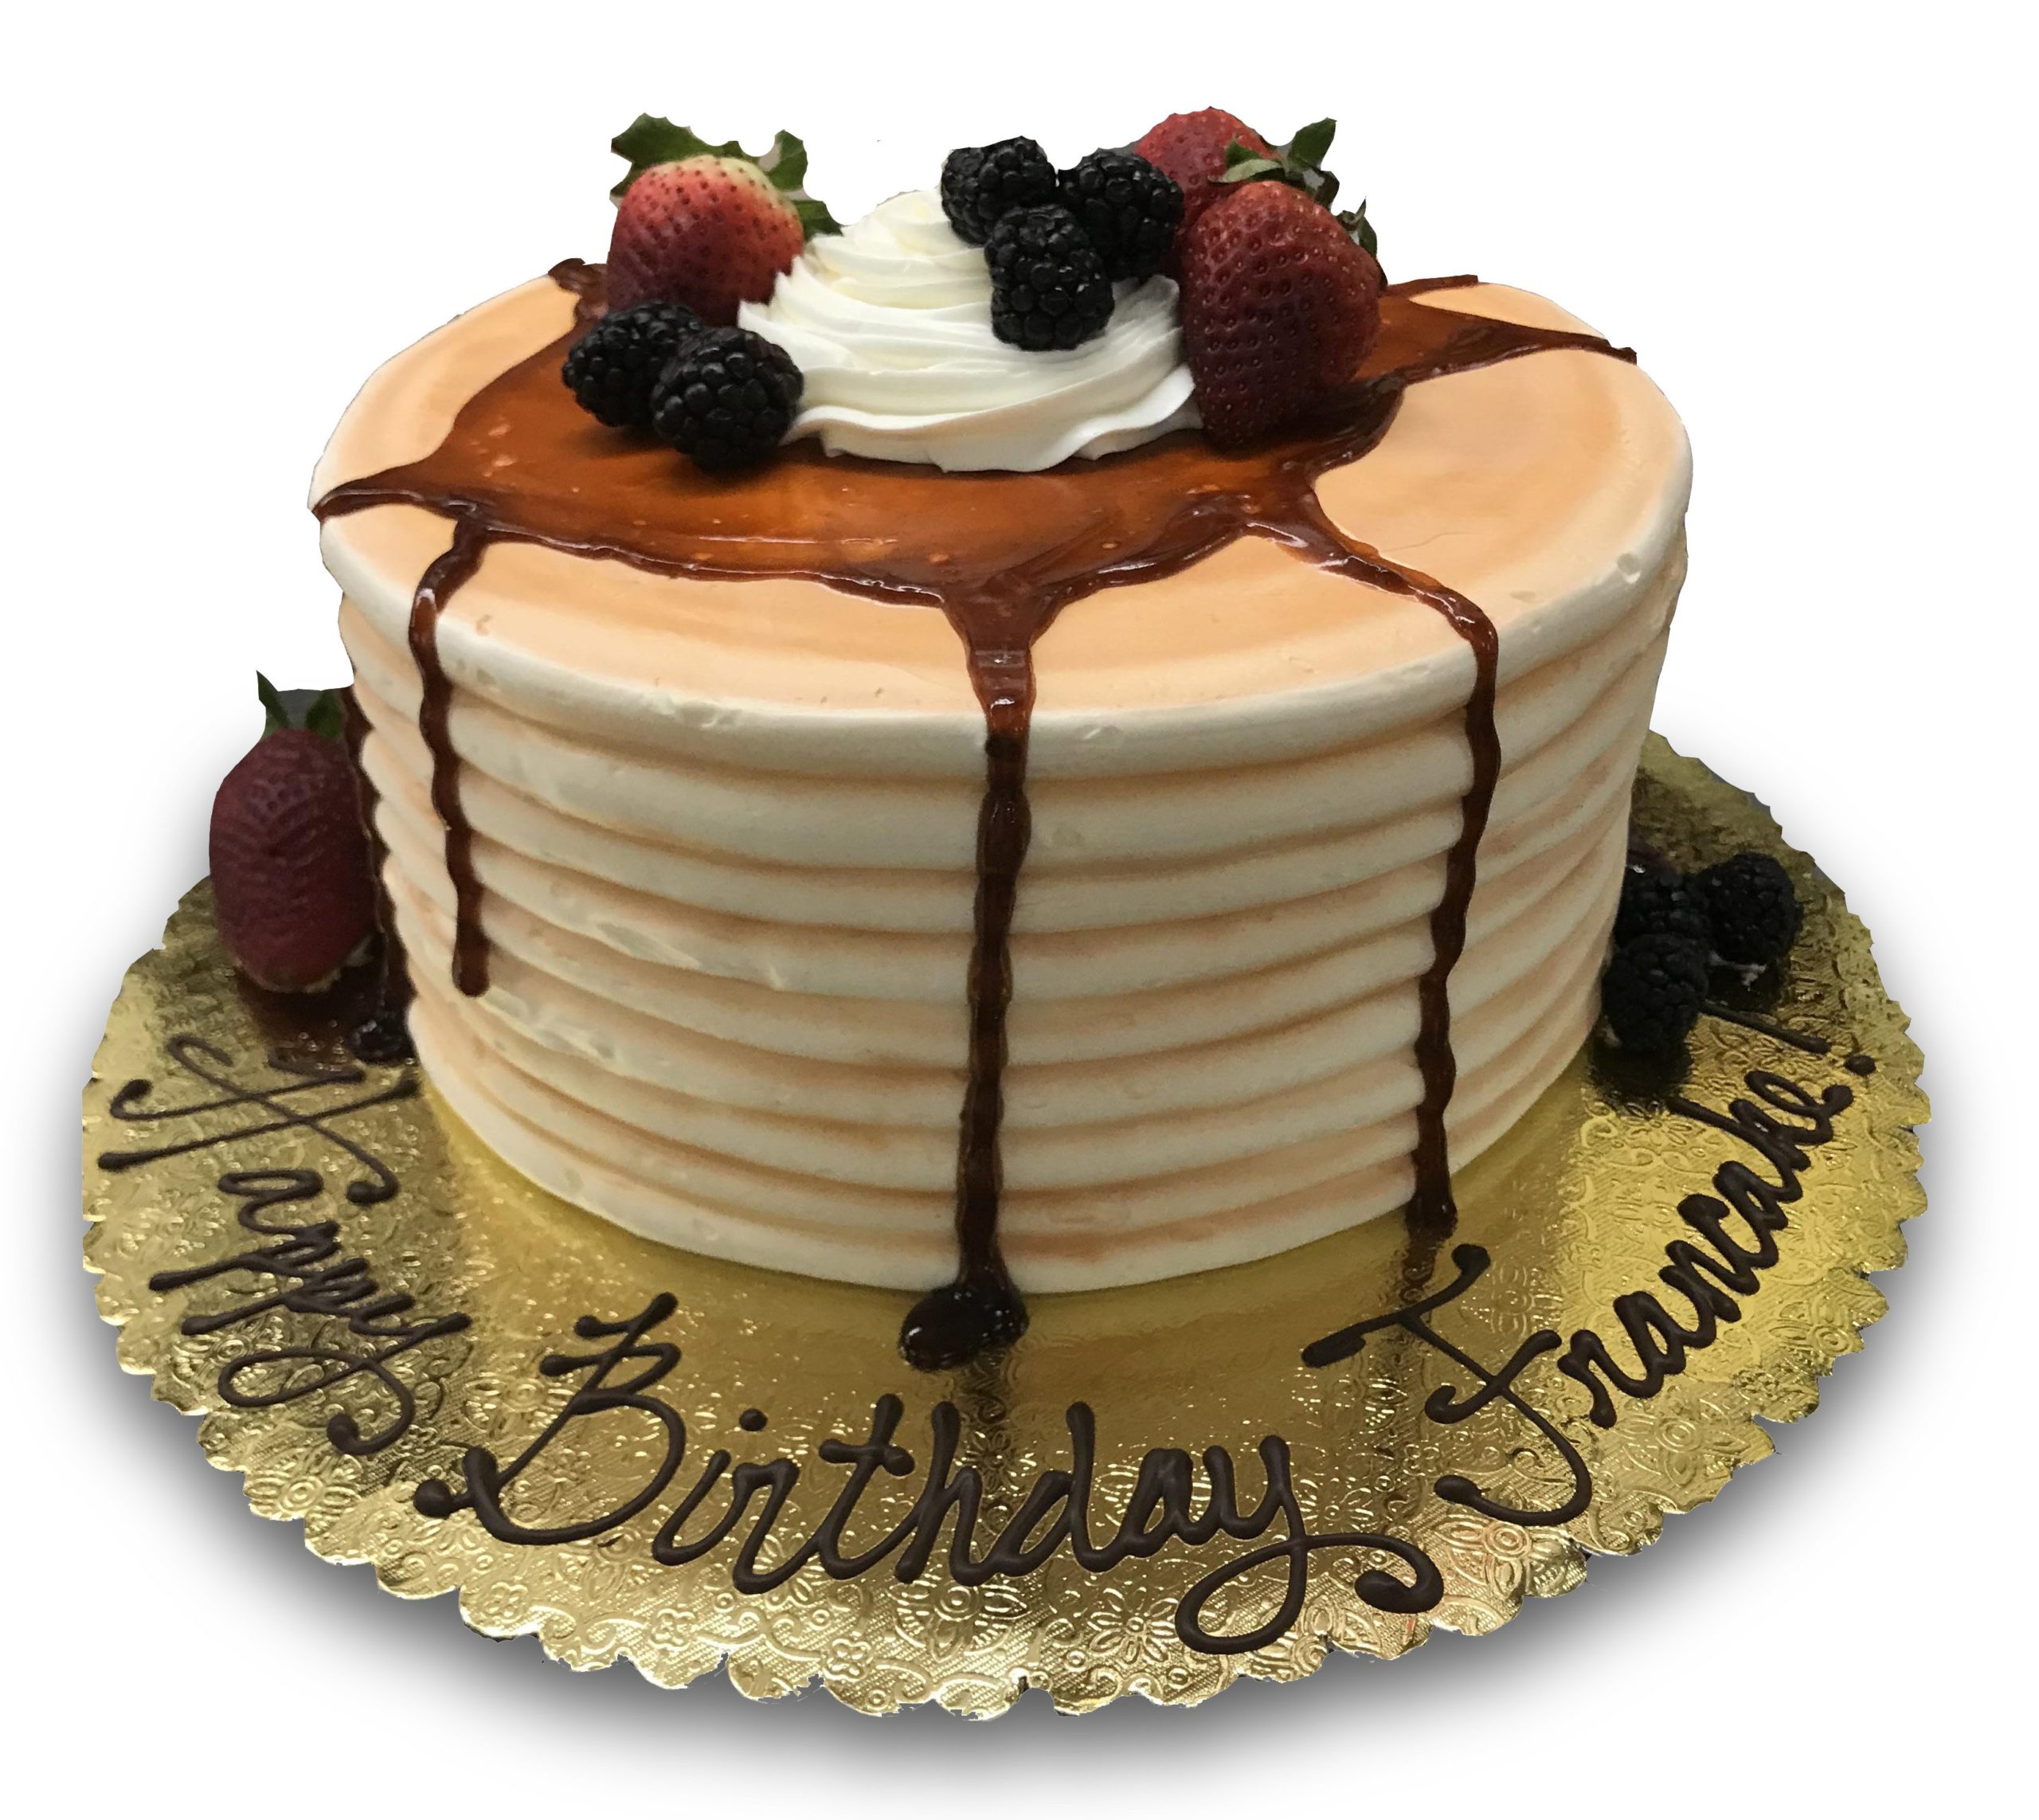 AB031. Pancake shaped birthday cake topped with fresh fruit